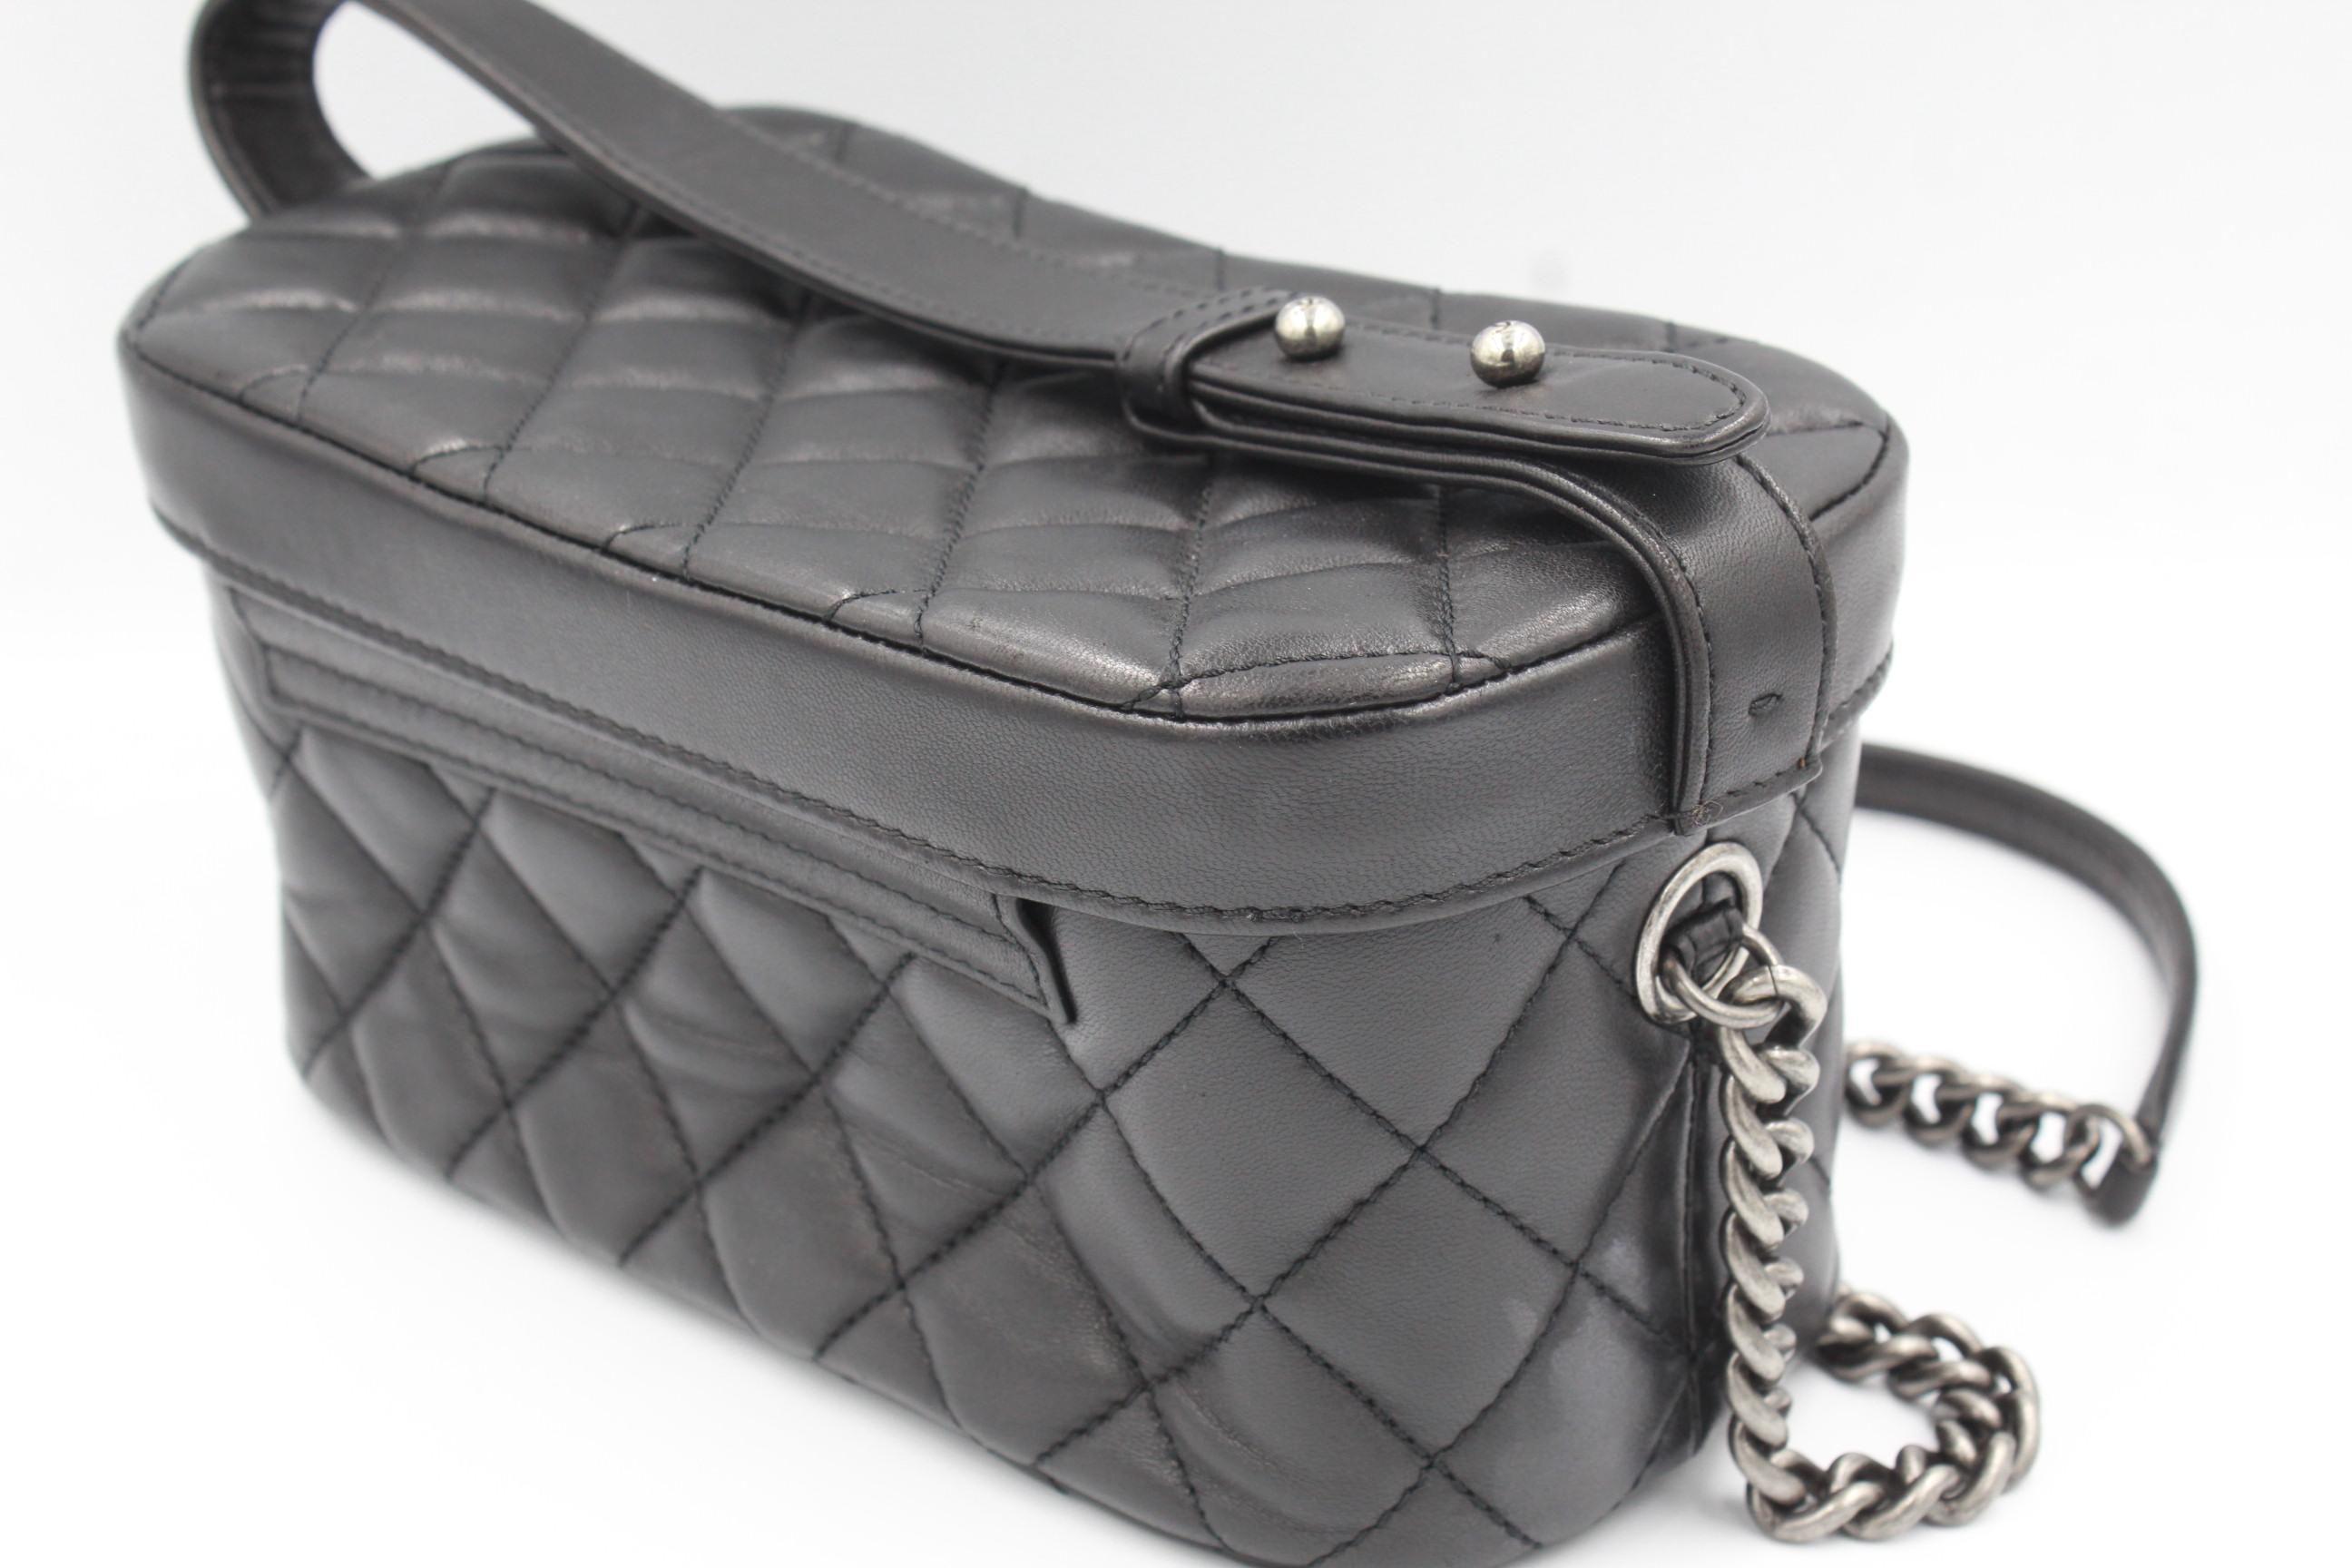 Chanel Vanity Boy bag in black leather.
2013 / 2014.
Good condition.
Shoulder strap. 
12cm x 21cm x 10cm
